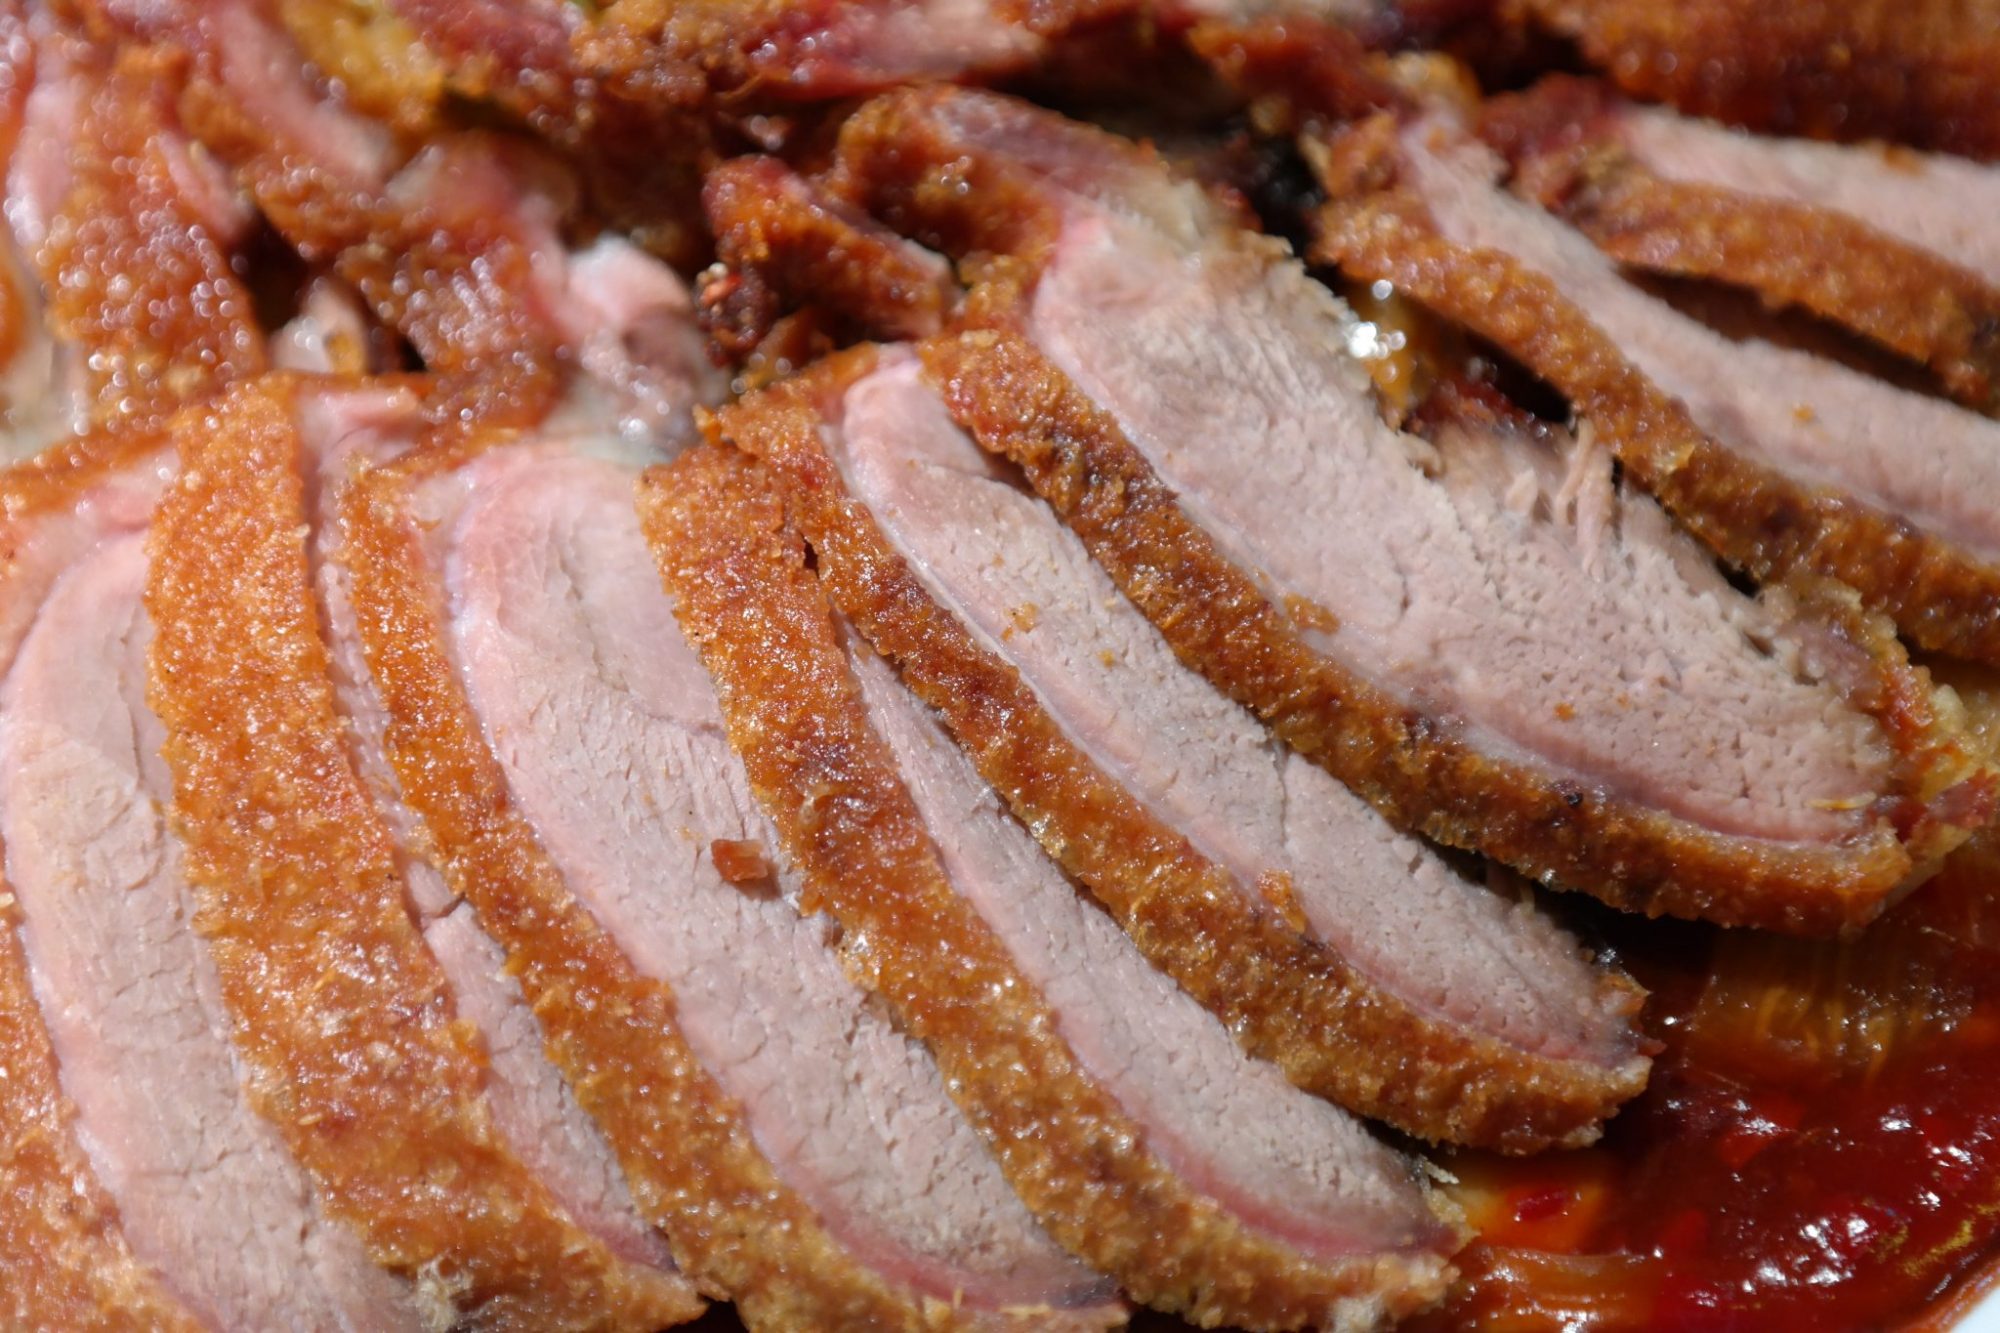 Pork roast with bacon and mushrooms